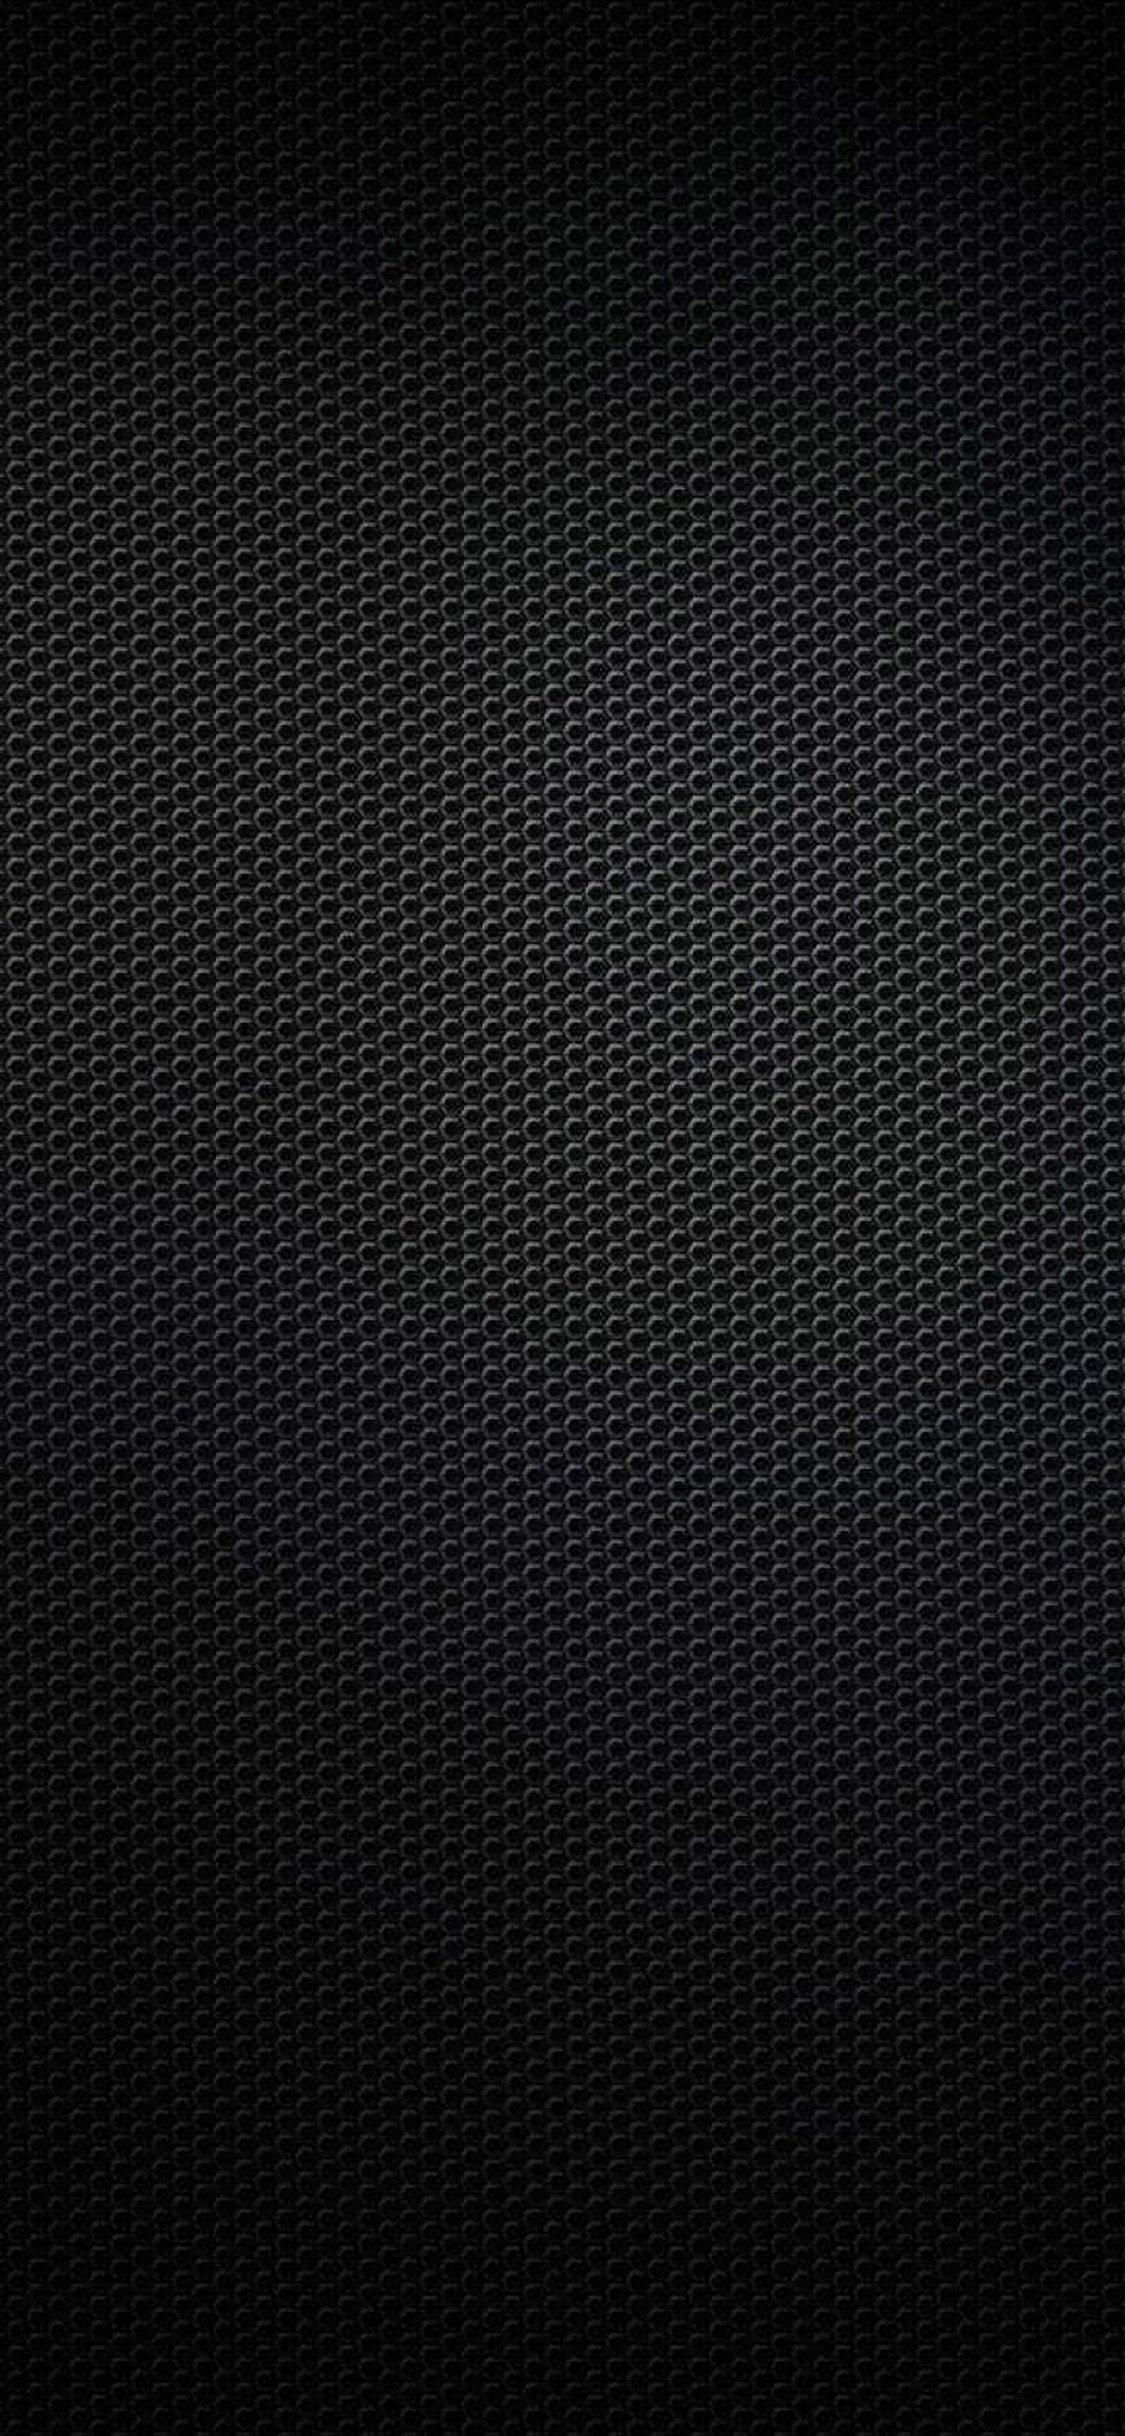 Carbon pattern black pattern iPhone X Wallpaper Free Download